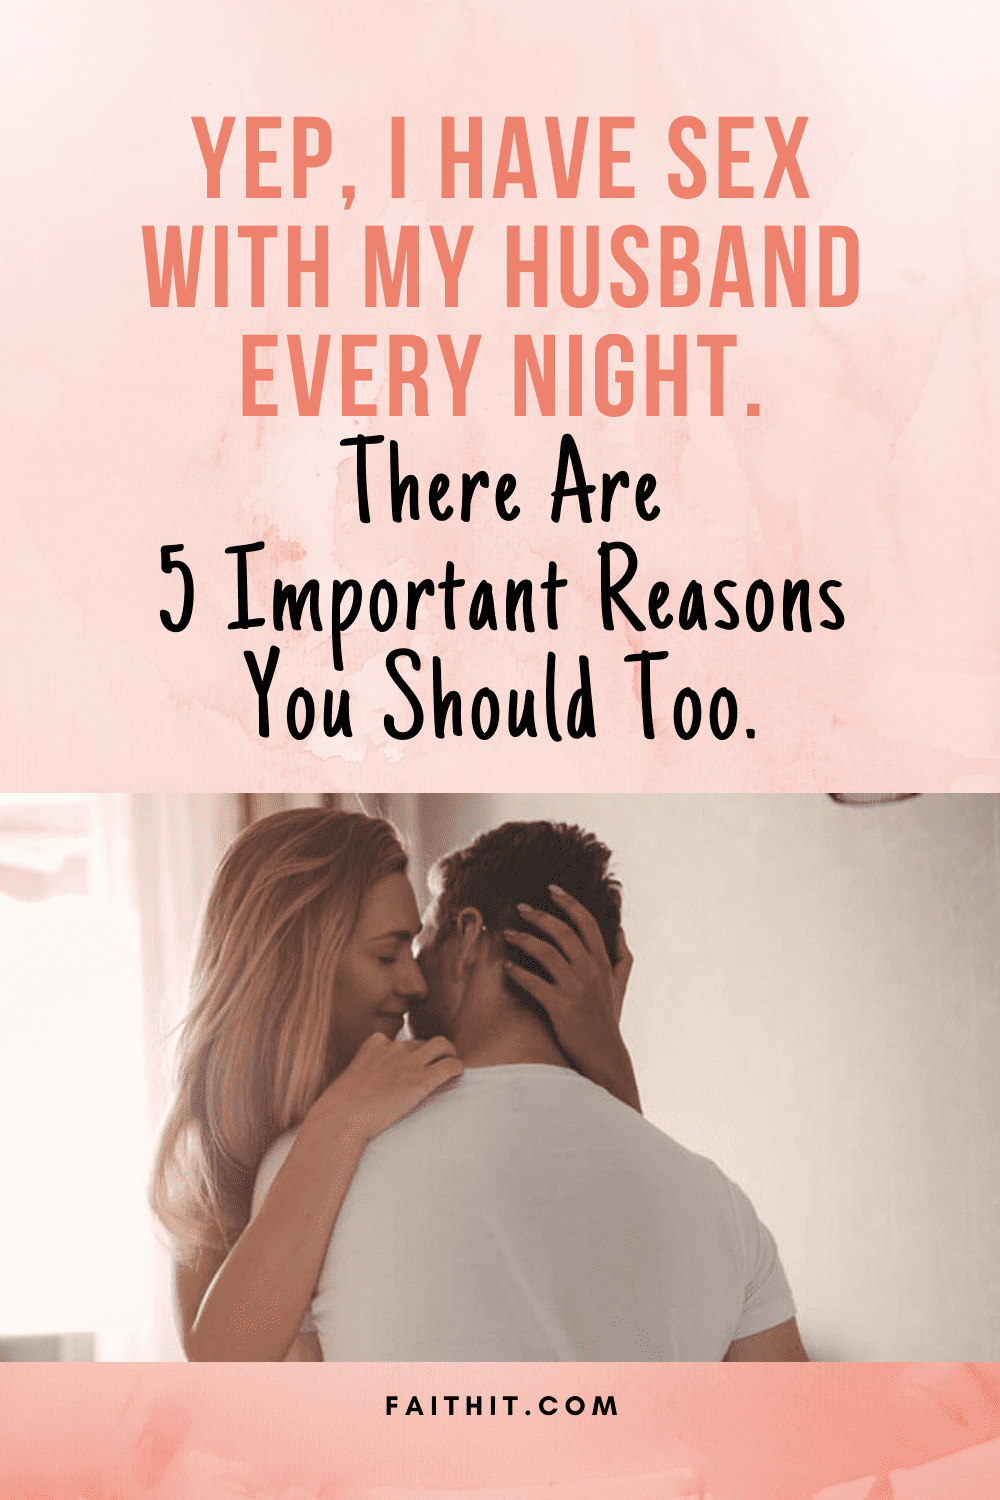 Yep, I Have Sex With My Husband Every Night image